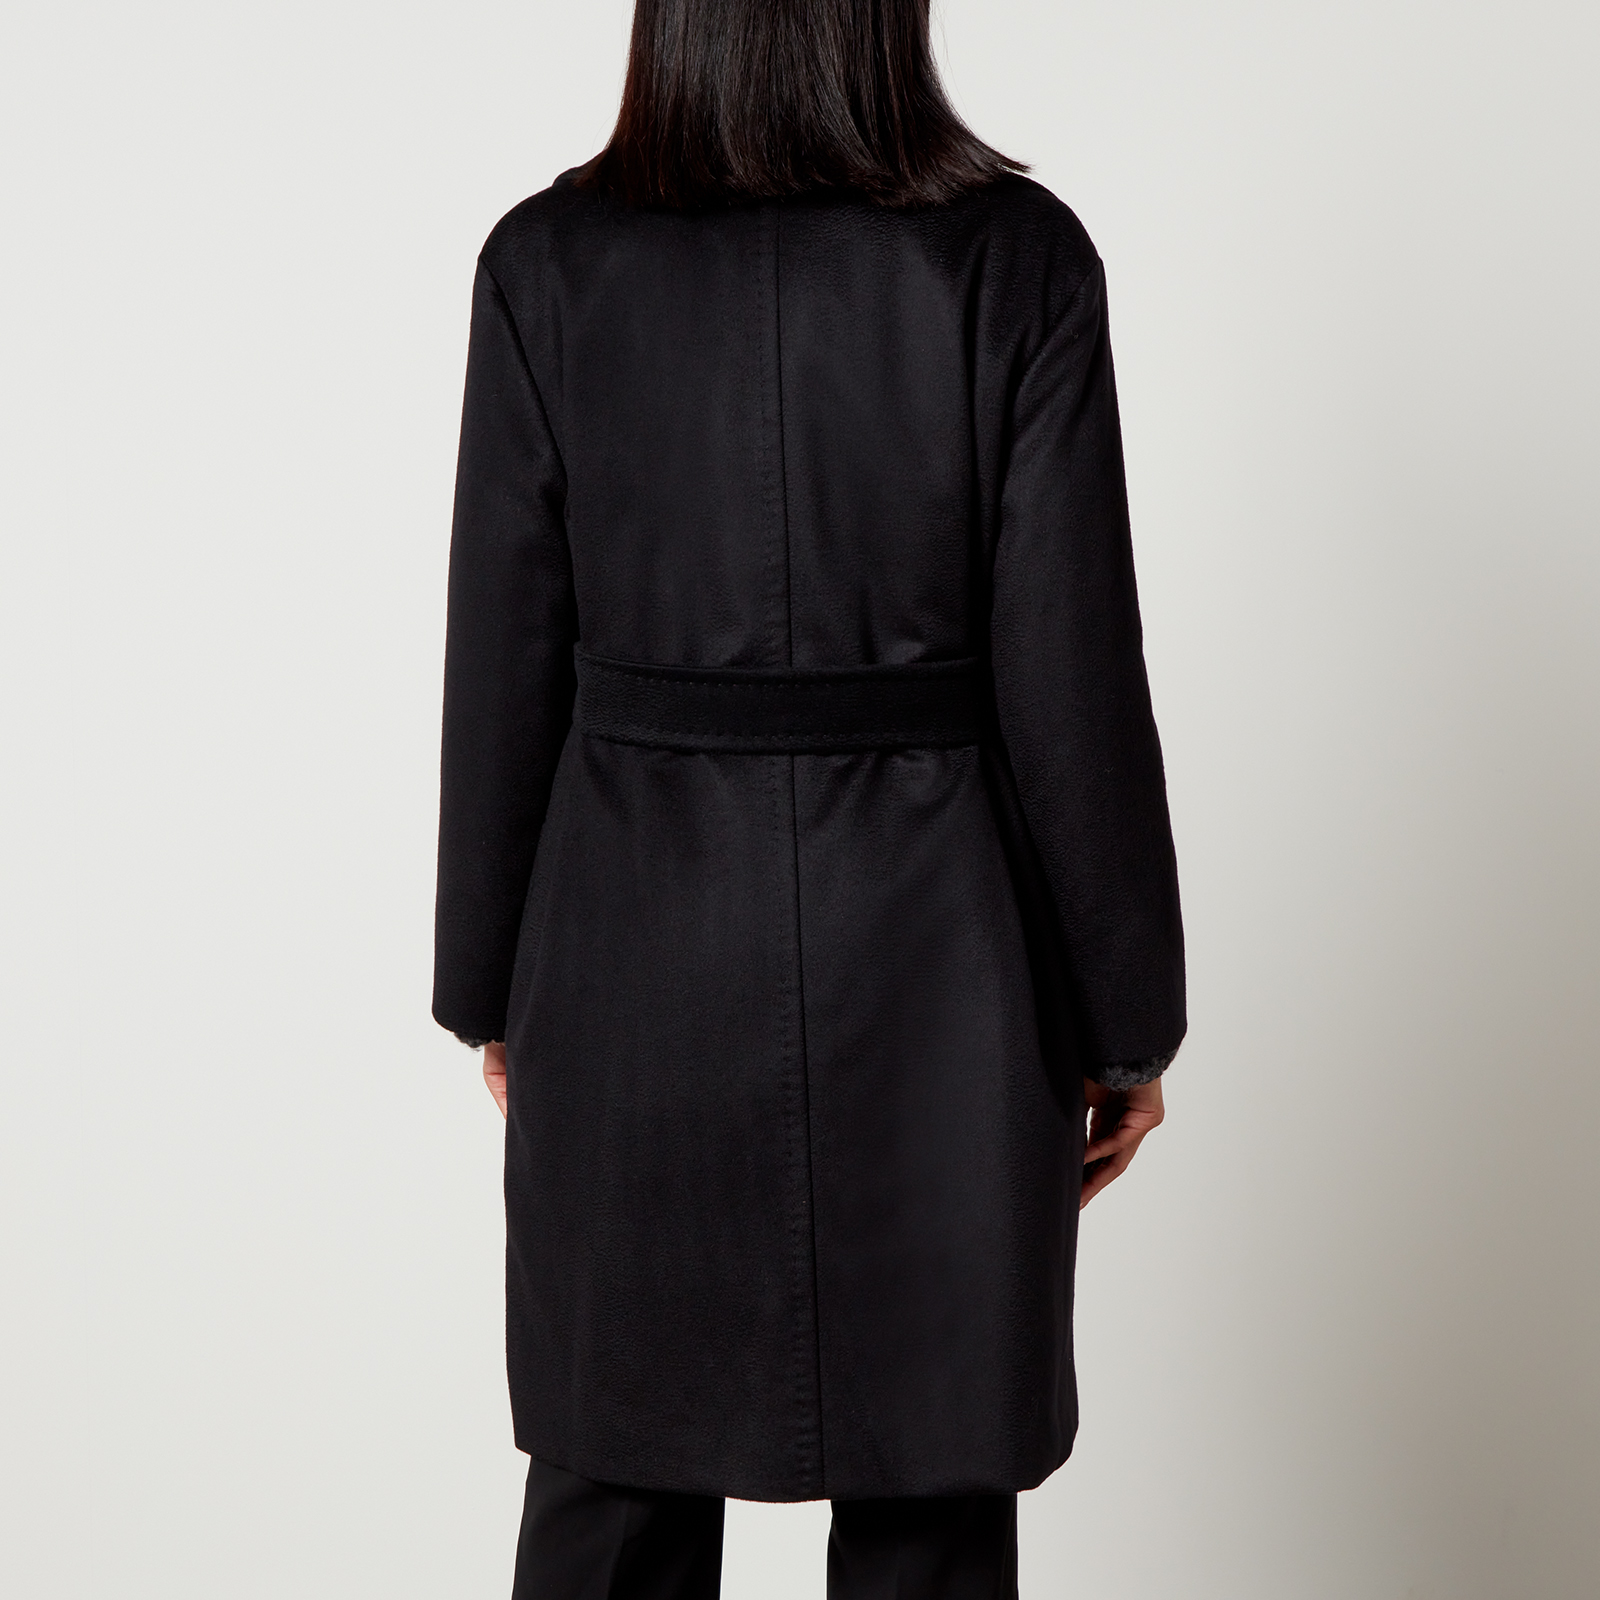 Max Mara Studio Tigre women's coat in wool Black